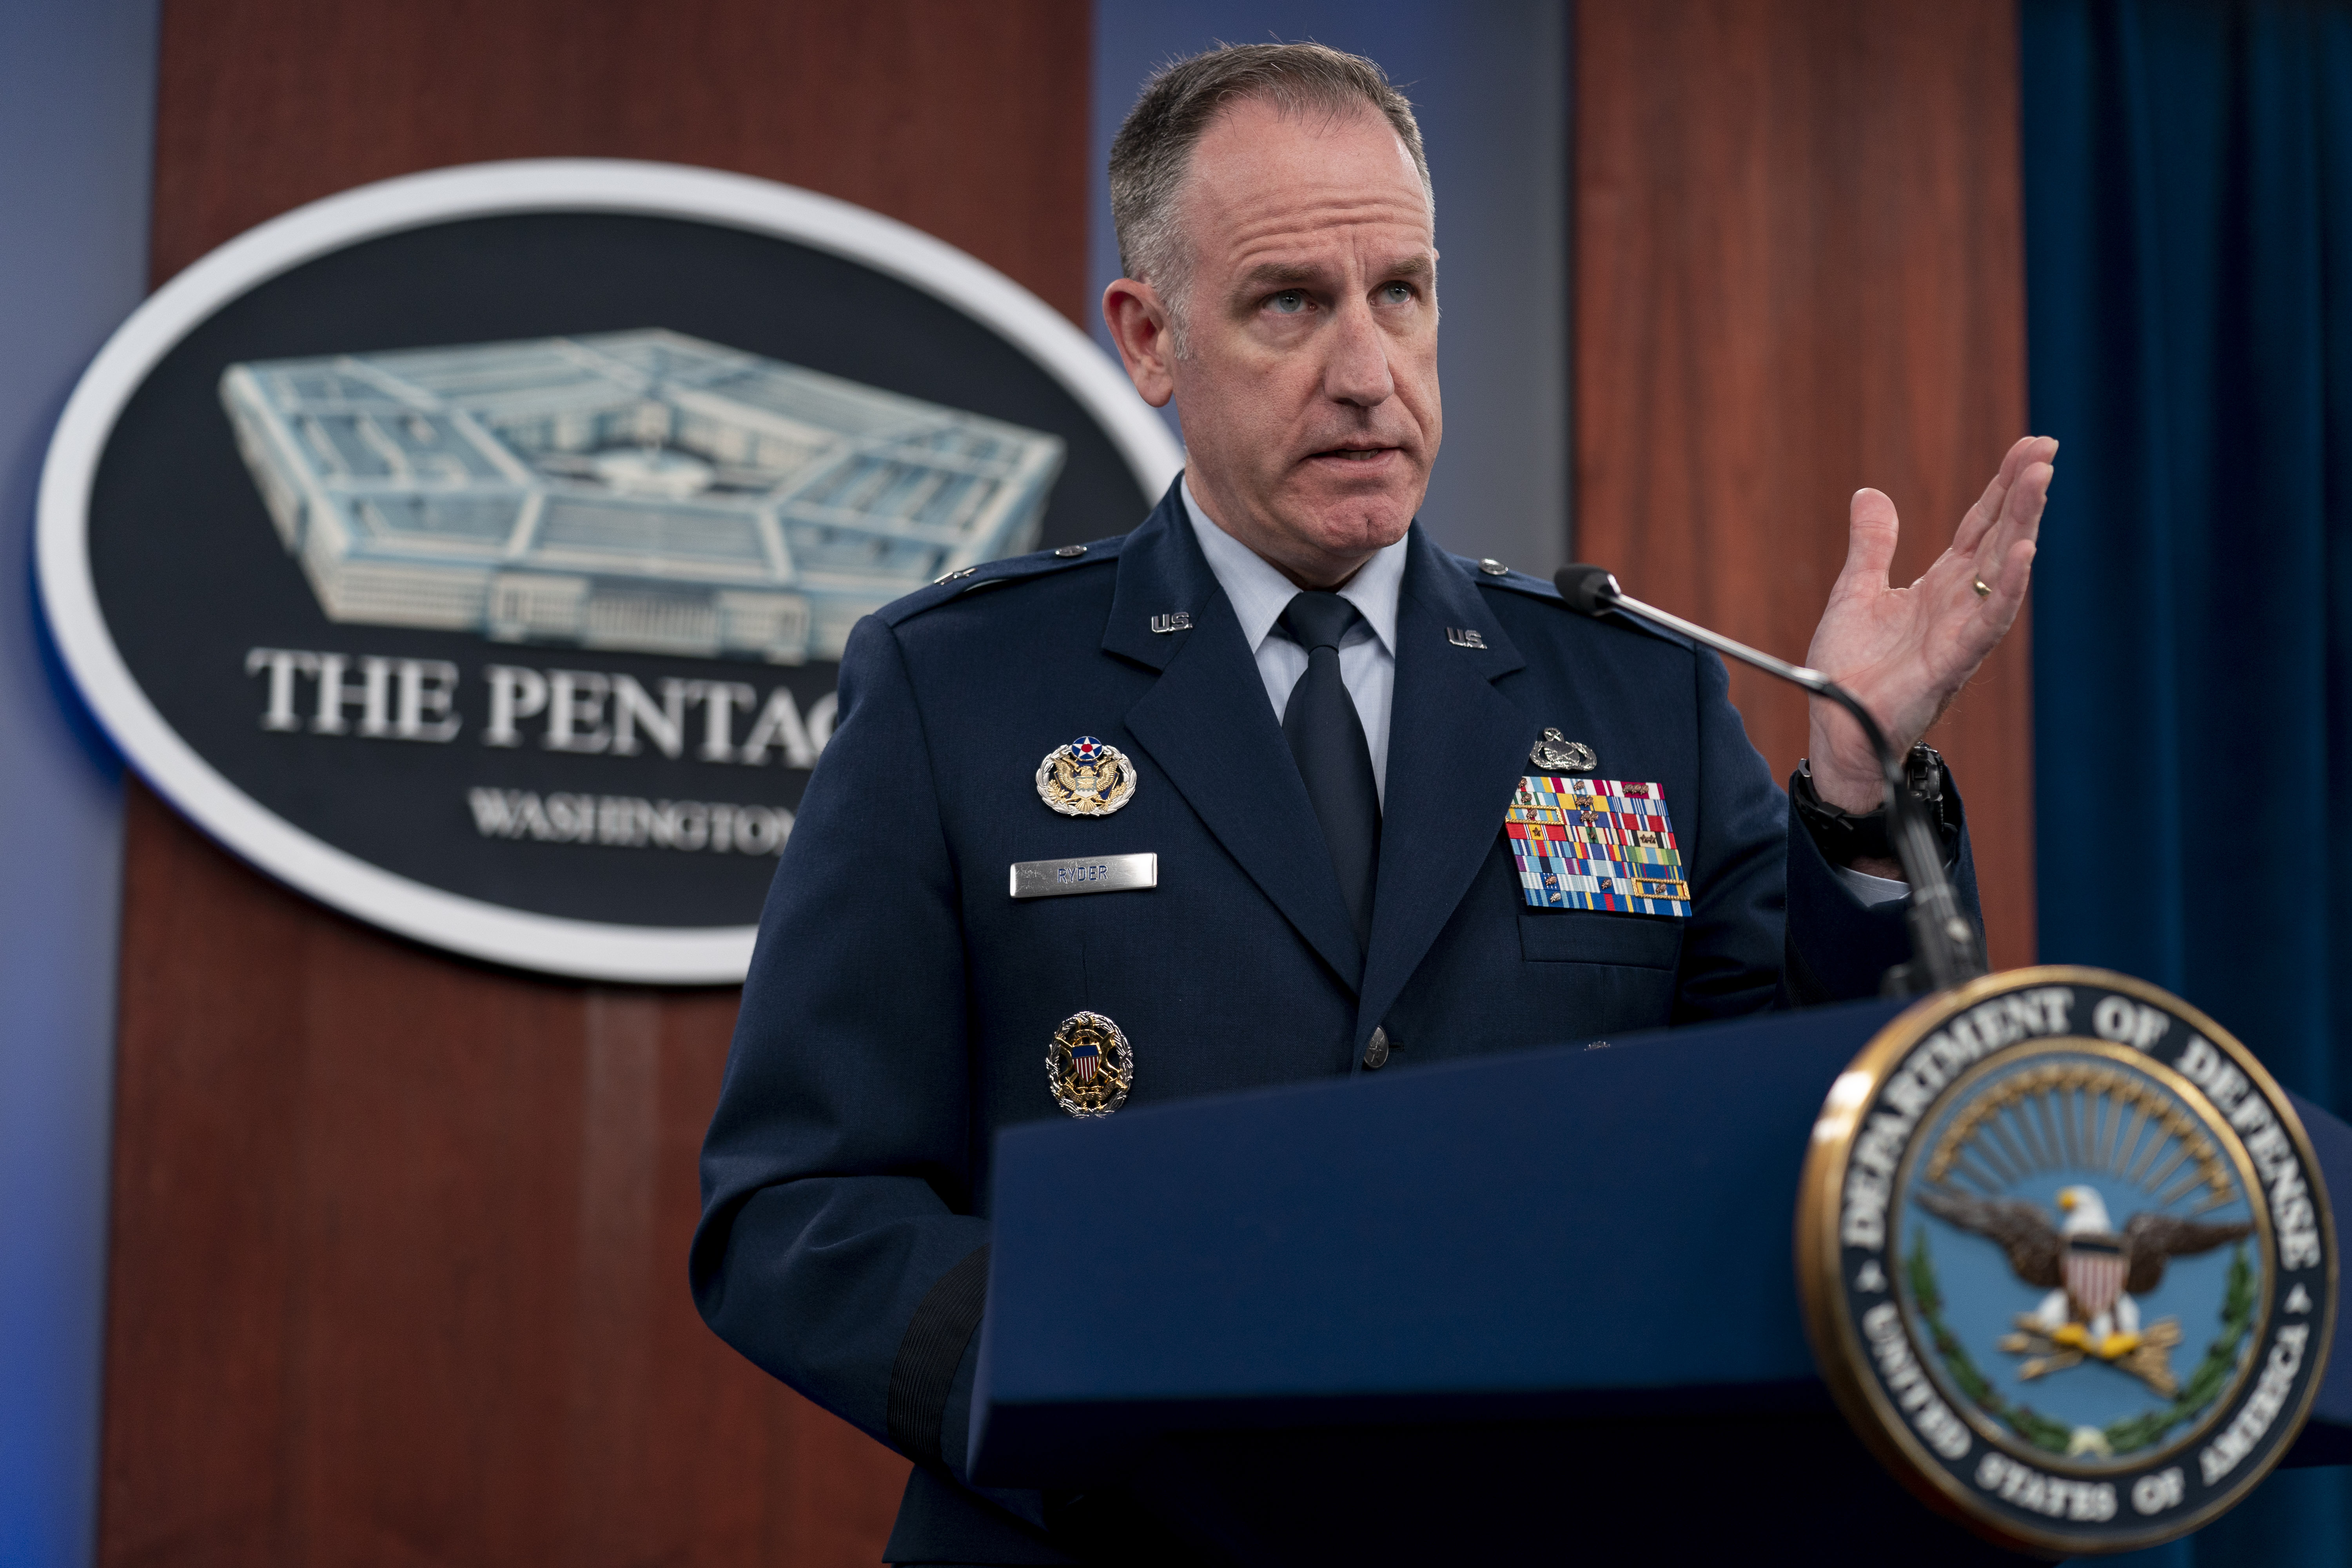 Pentagon spokesman Air Force Brig. Gen. Patrick Ryder speaks during a briefing at the Pentagon in Washington, Tuesday, Sept. 6, 2022. (AP Photo/Andrew Harnik)